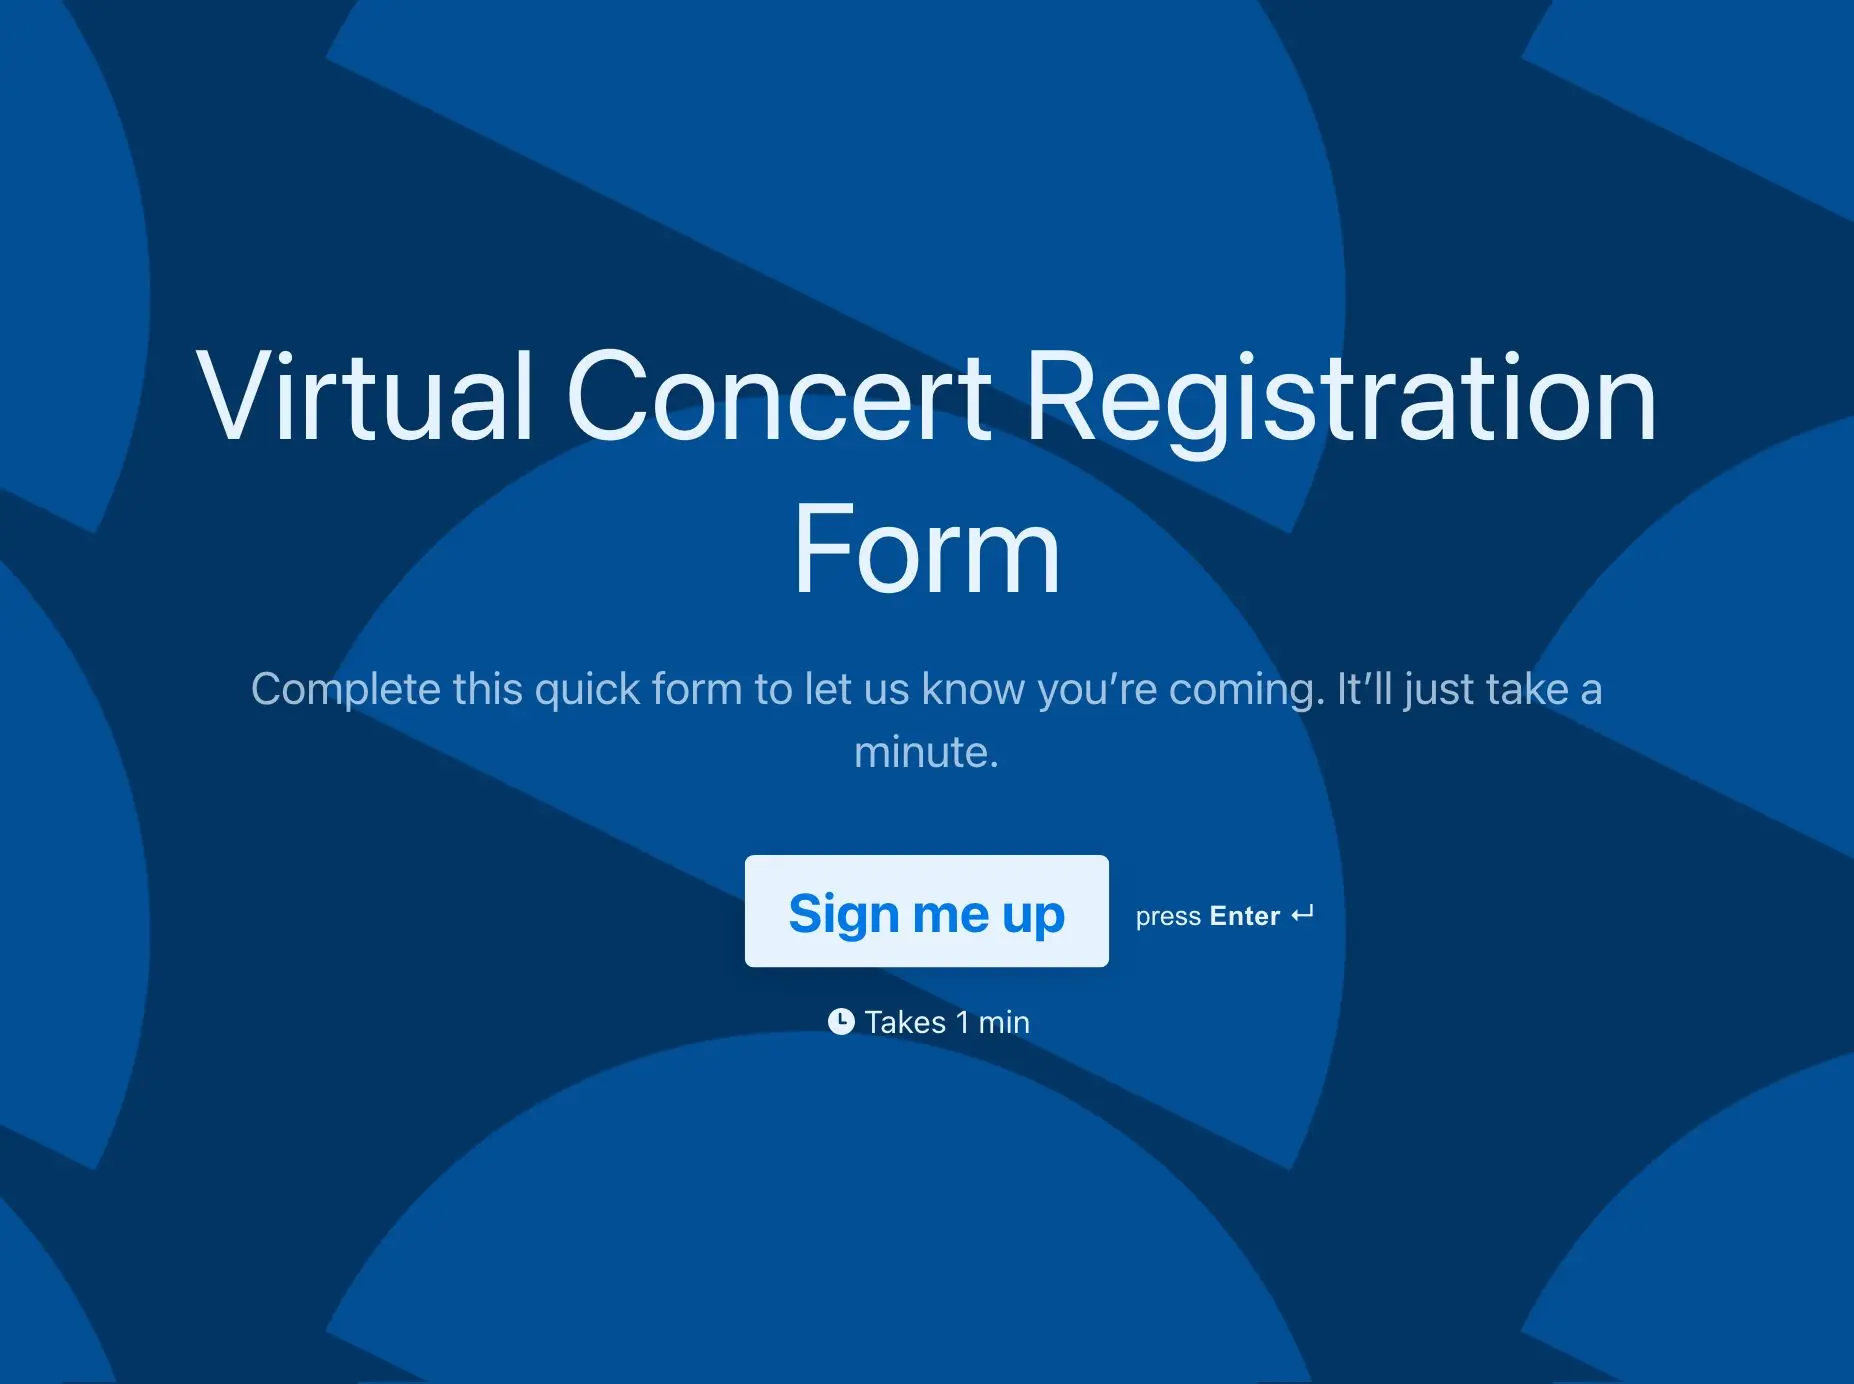 Virtual Concert Registration Form Template Hero